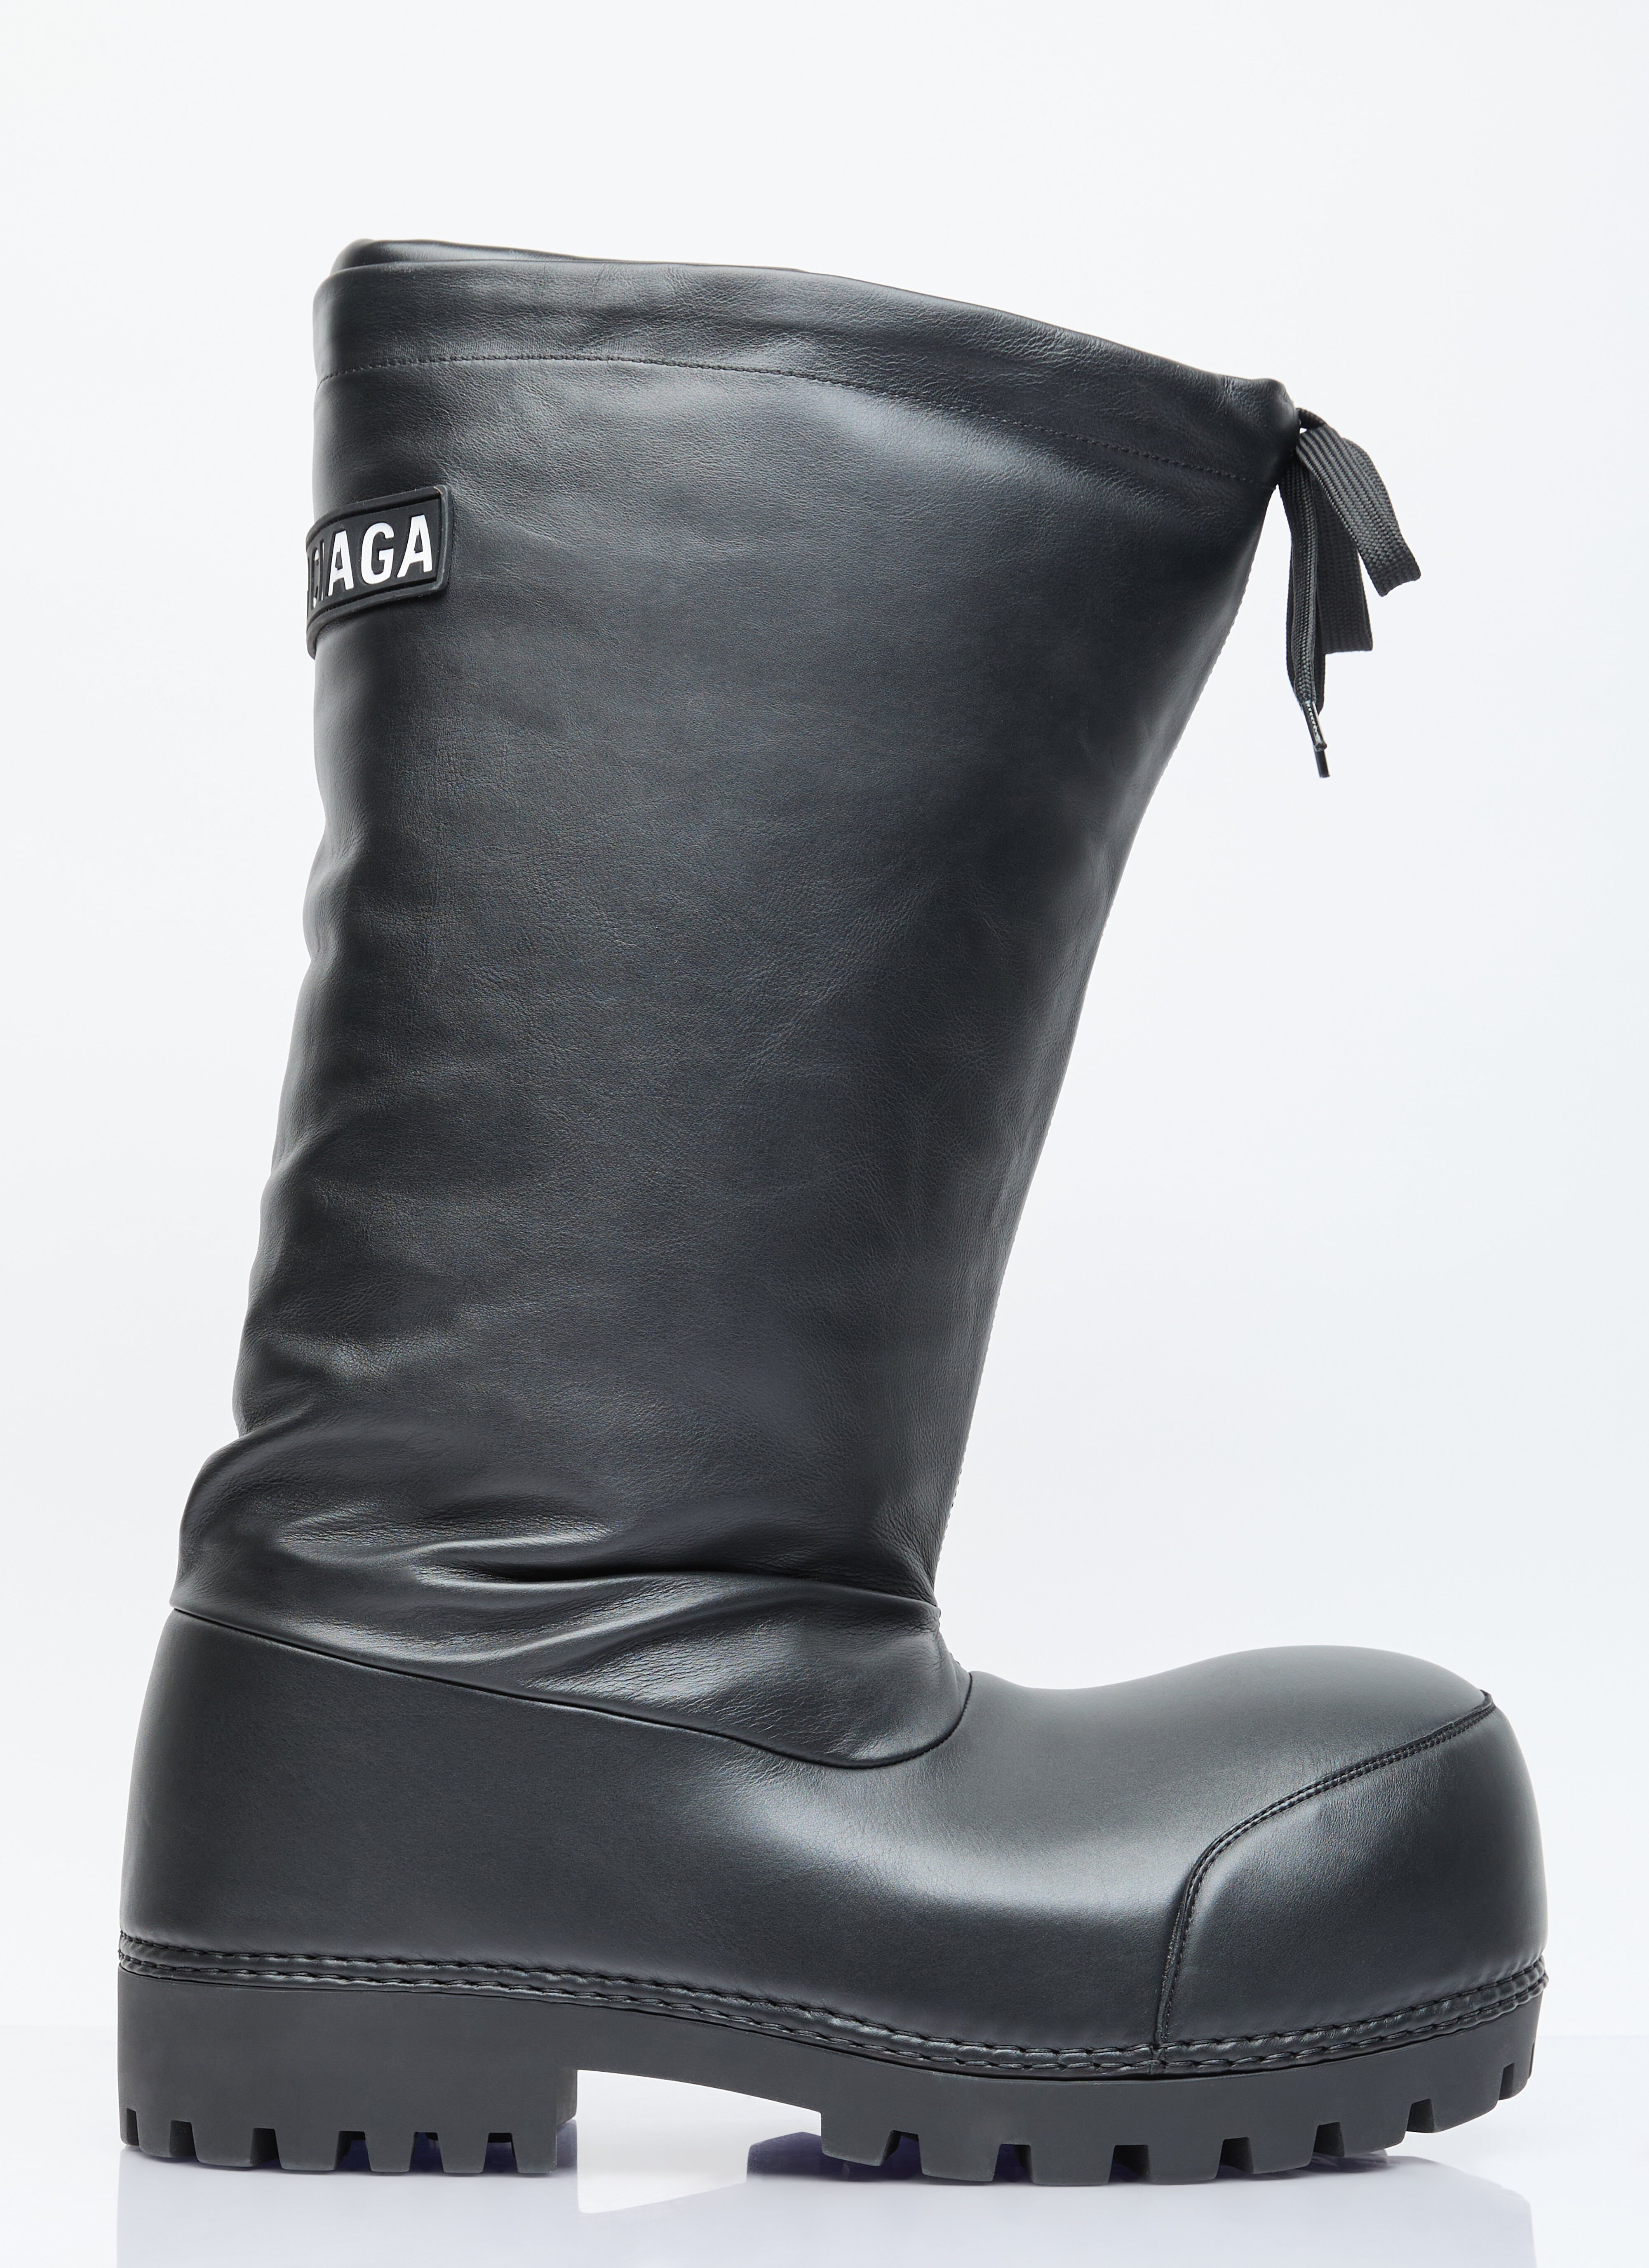 Vivienne Westwood Alaska High Leather Boots Grey vvw0156010